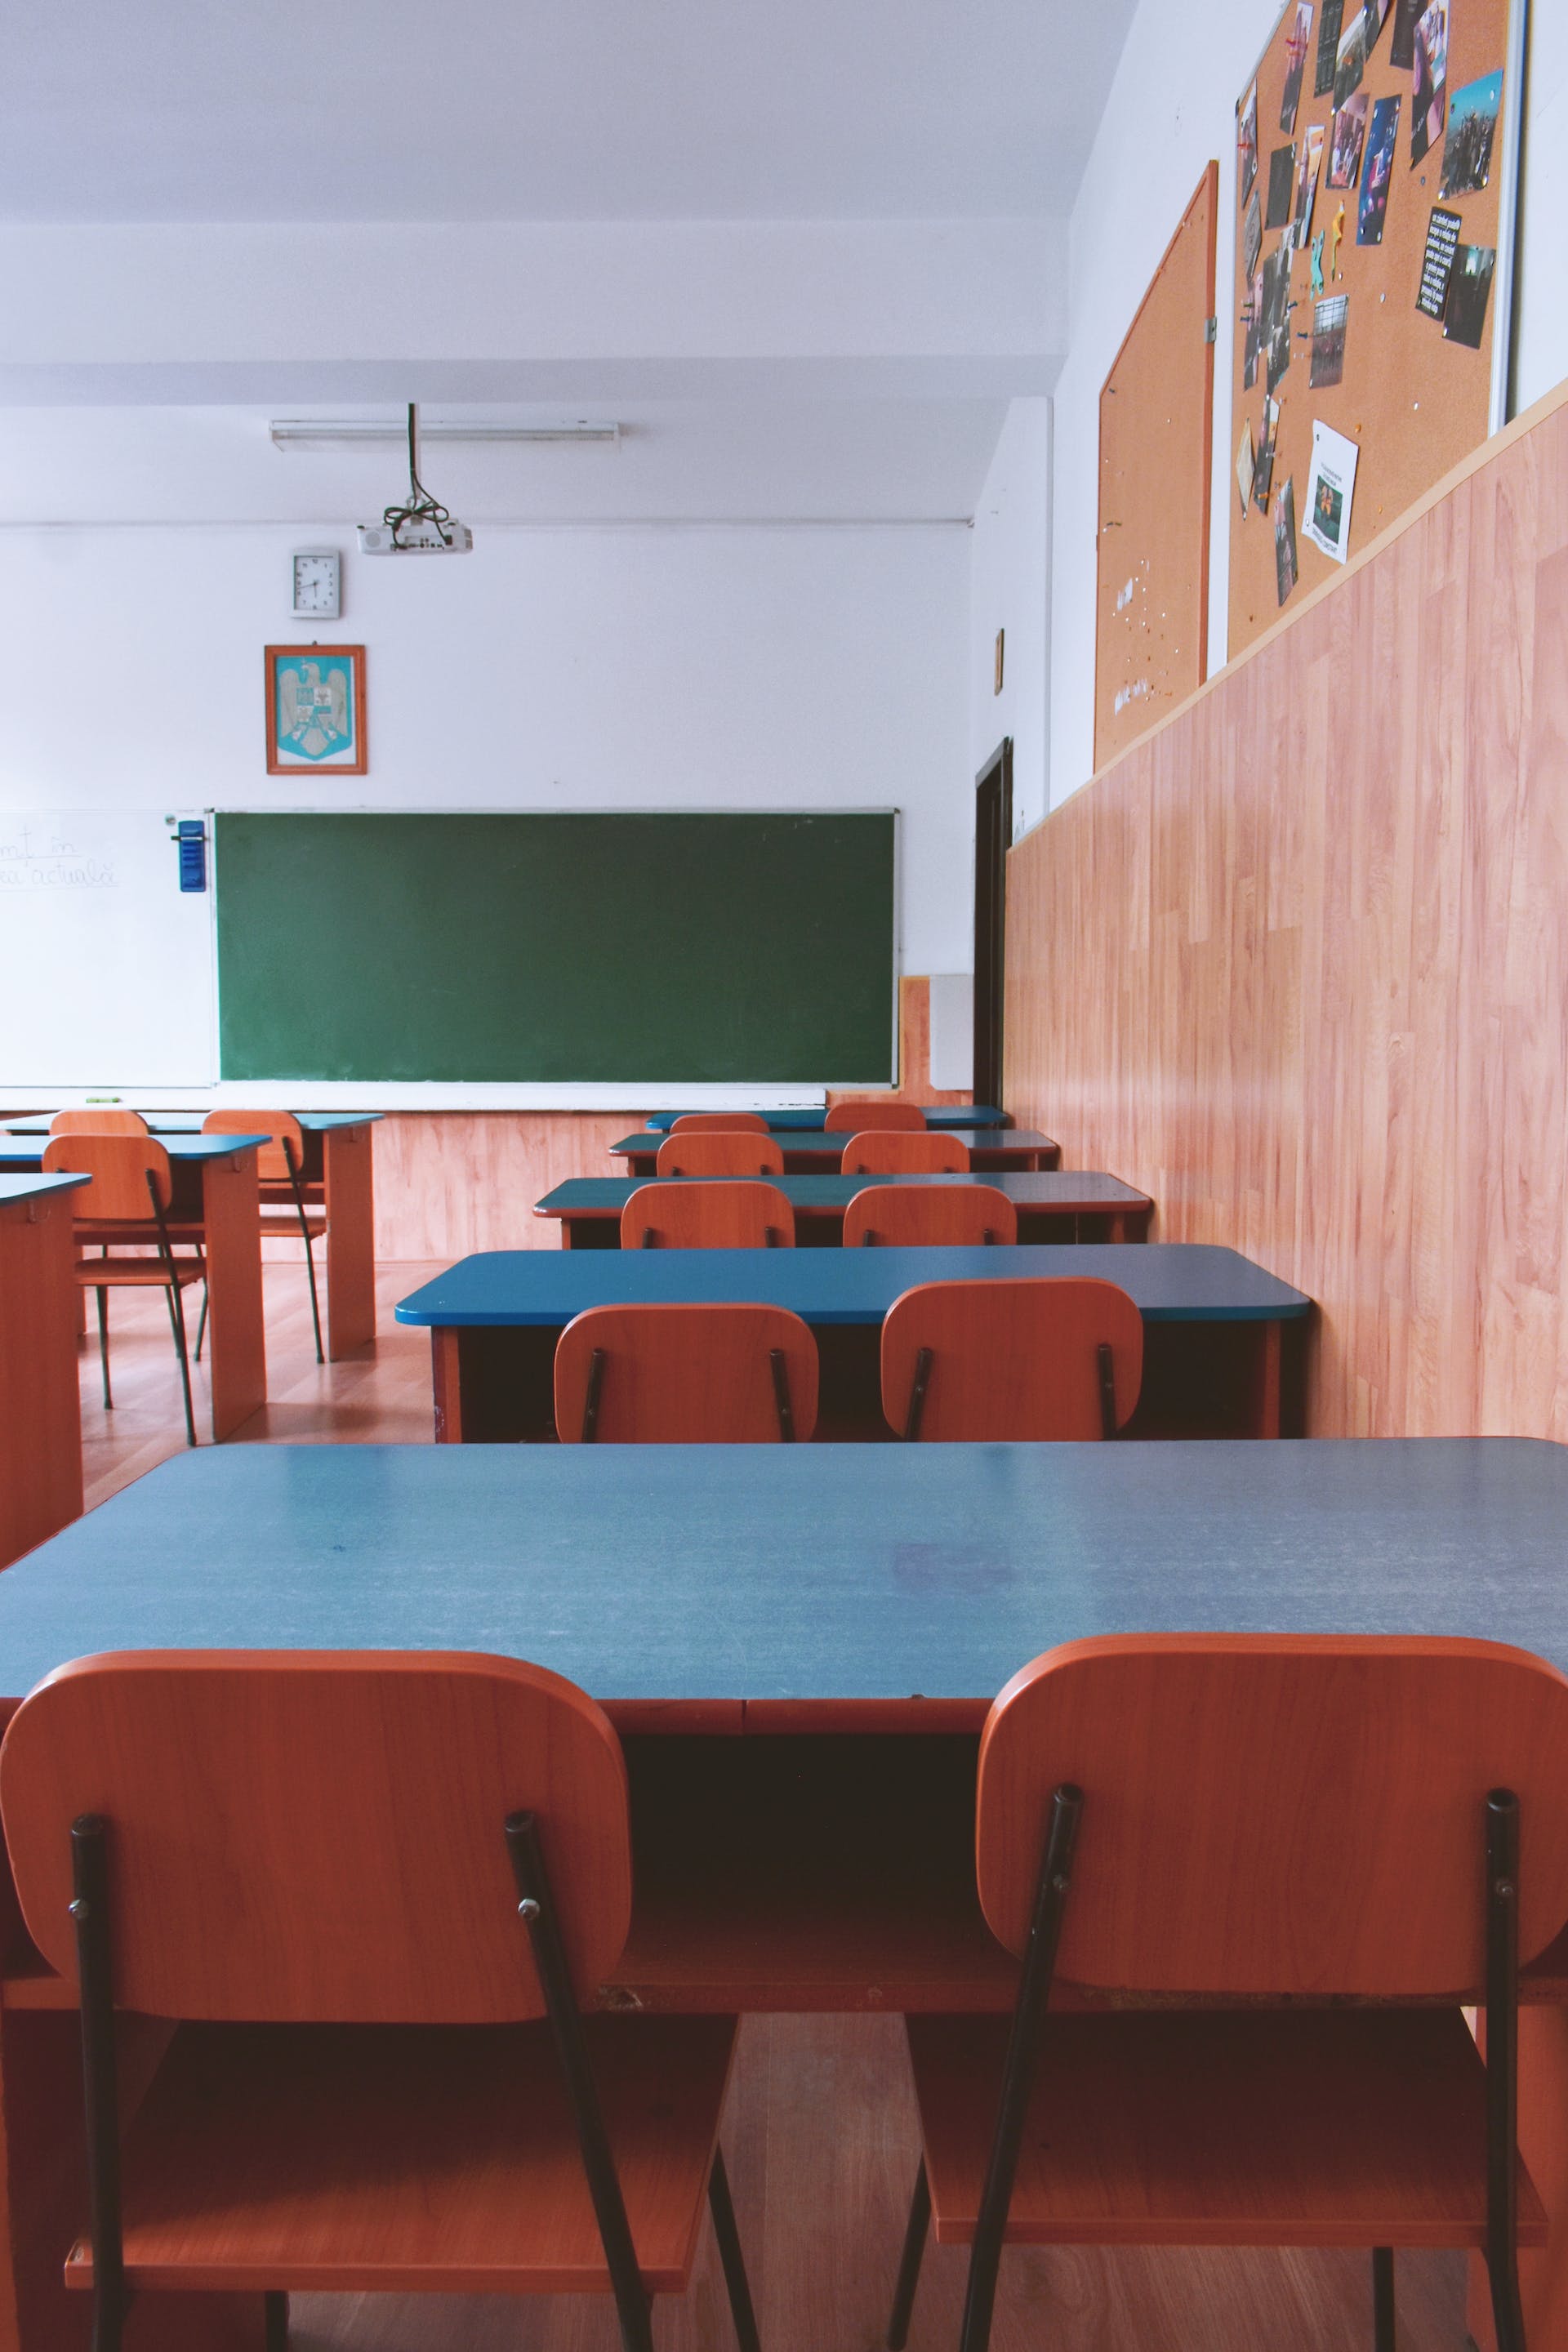 An empty classroom | Source: Pexels